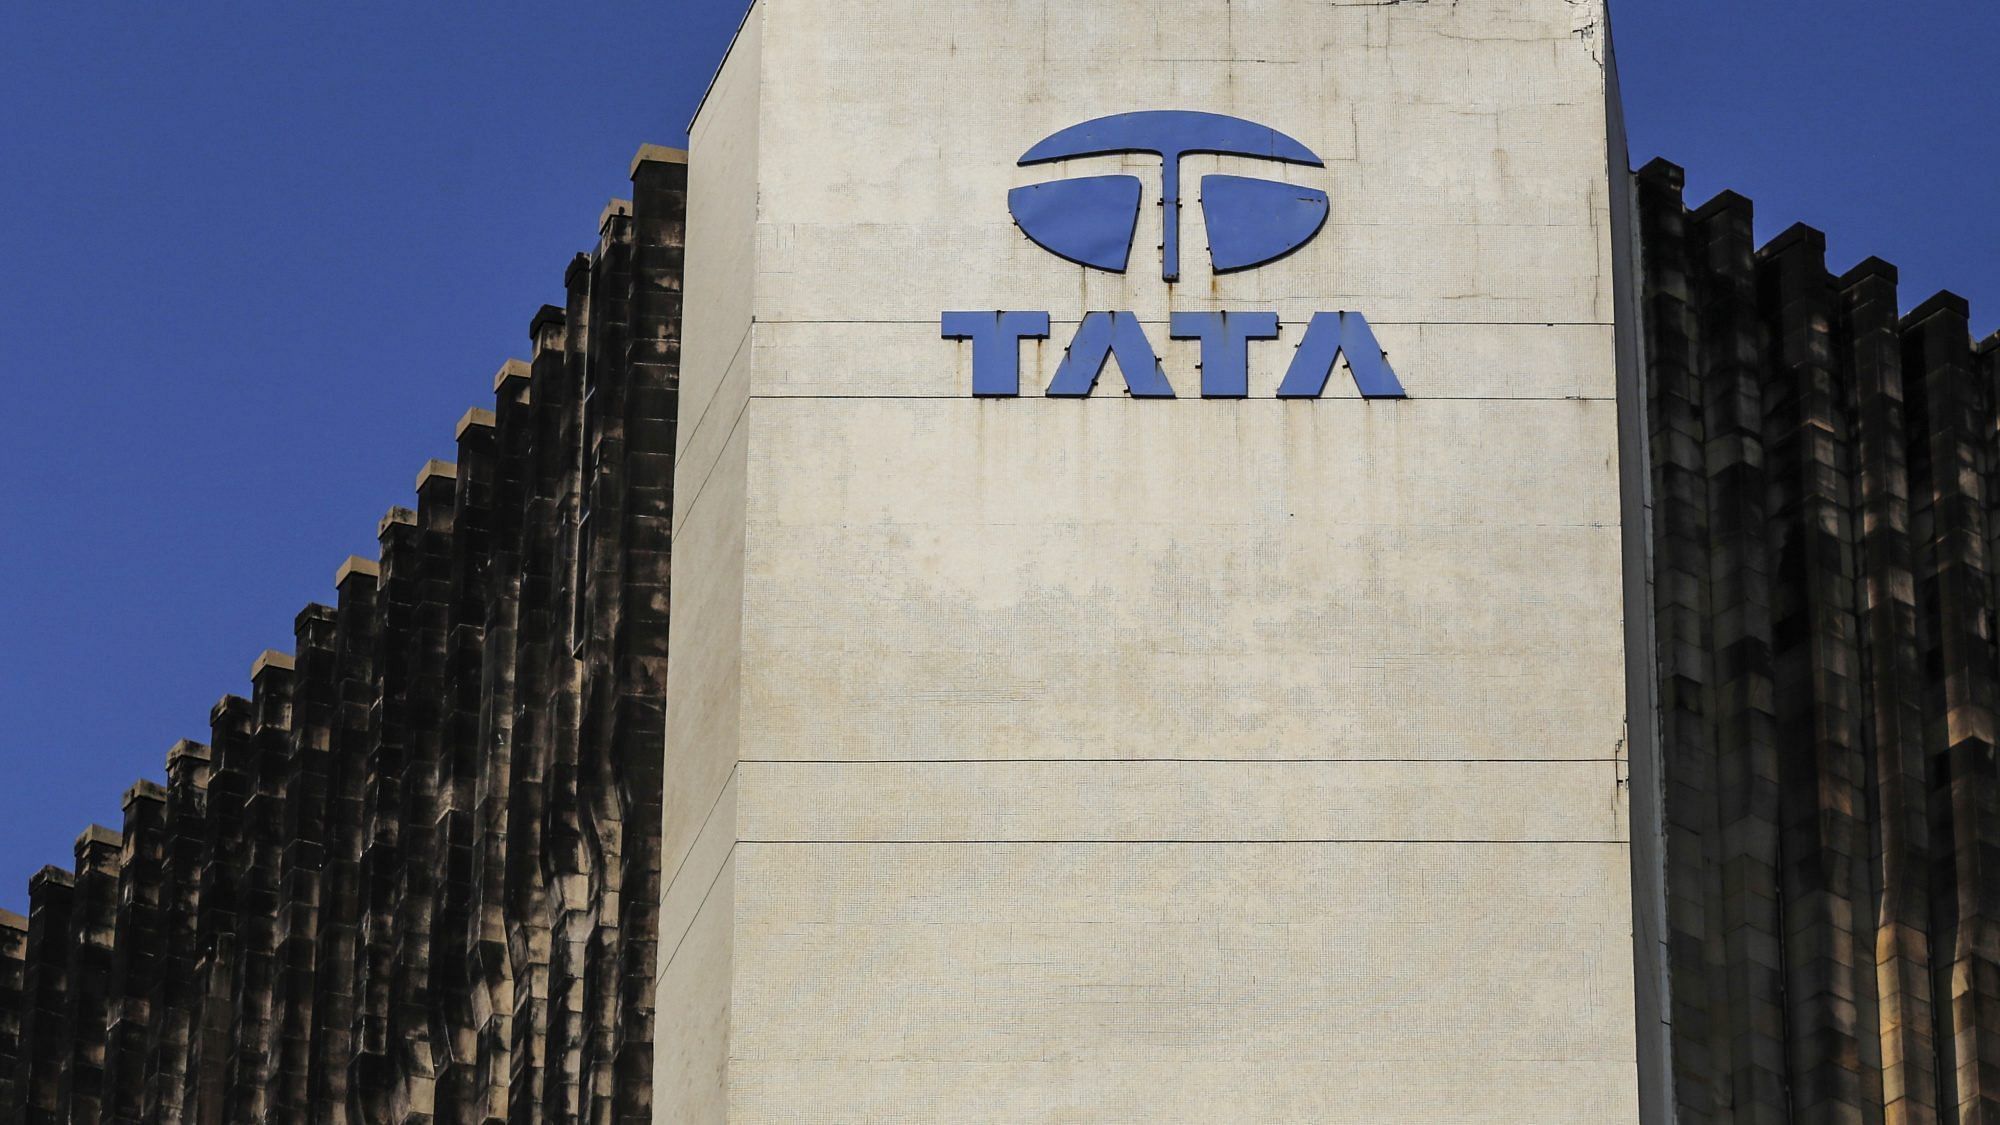 Tata group wins contract to build new Parliament, beats L&T’s bid